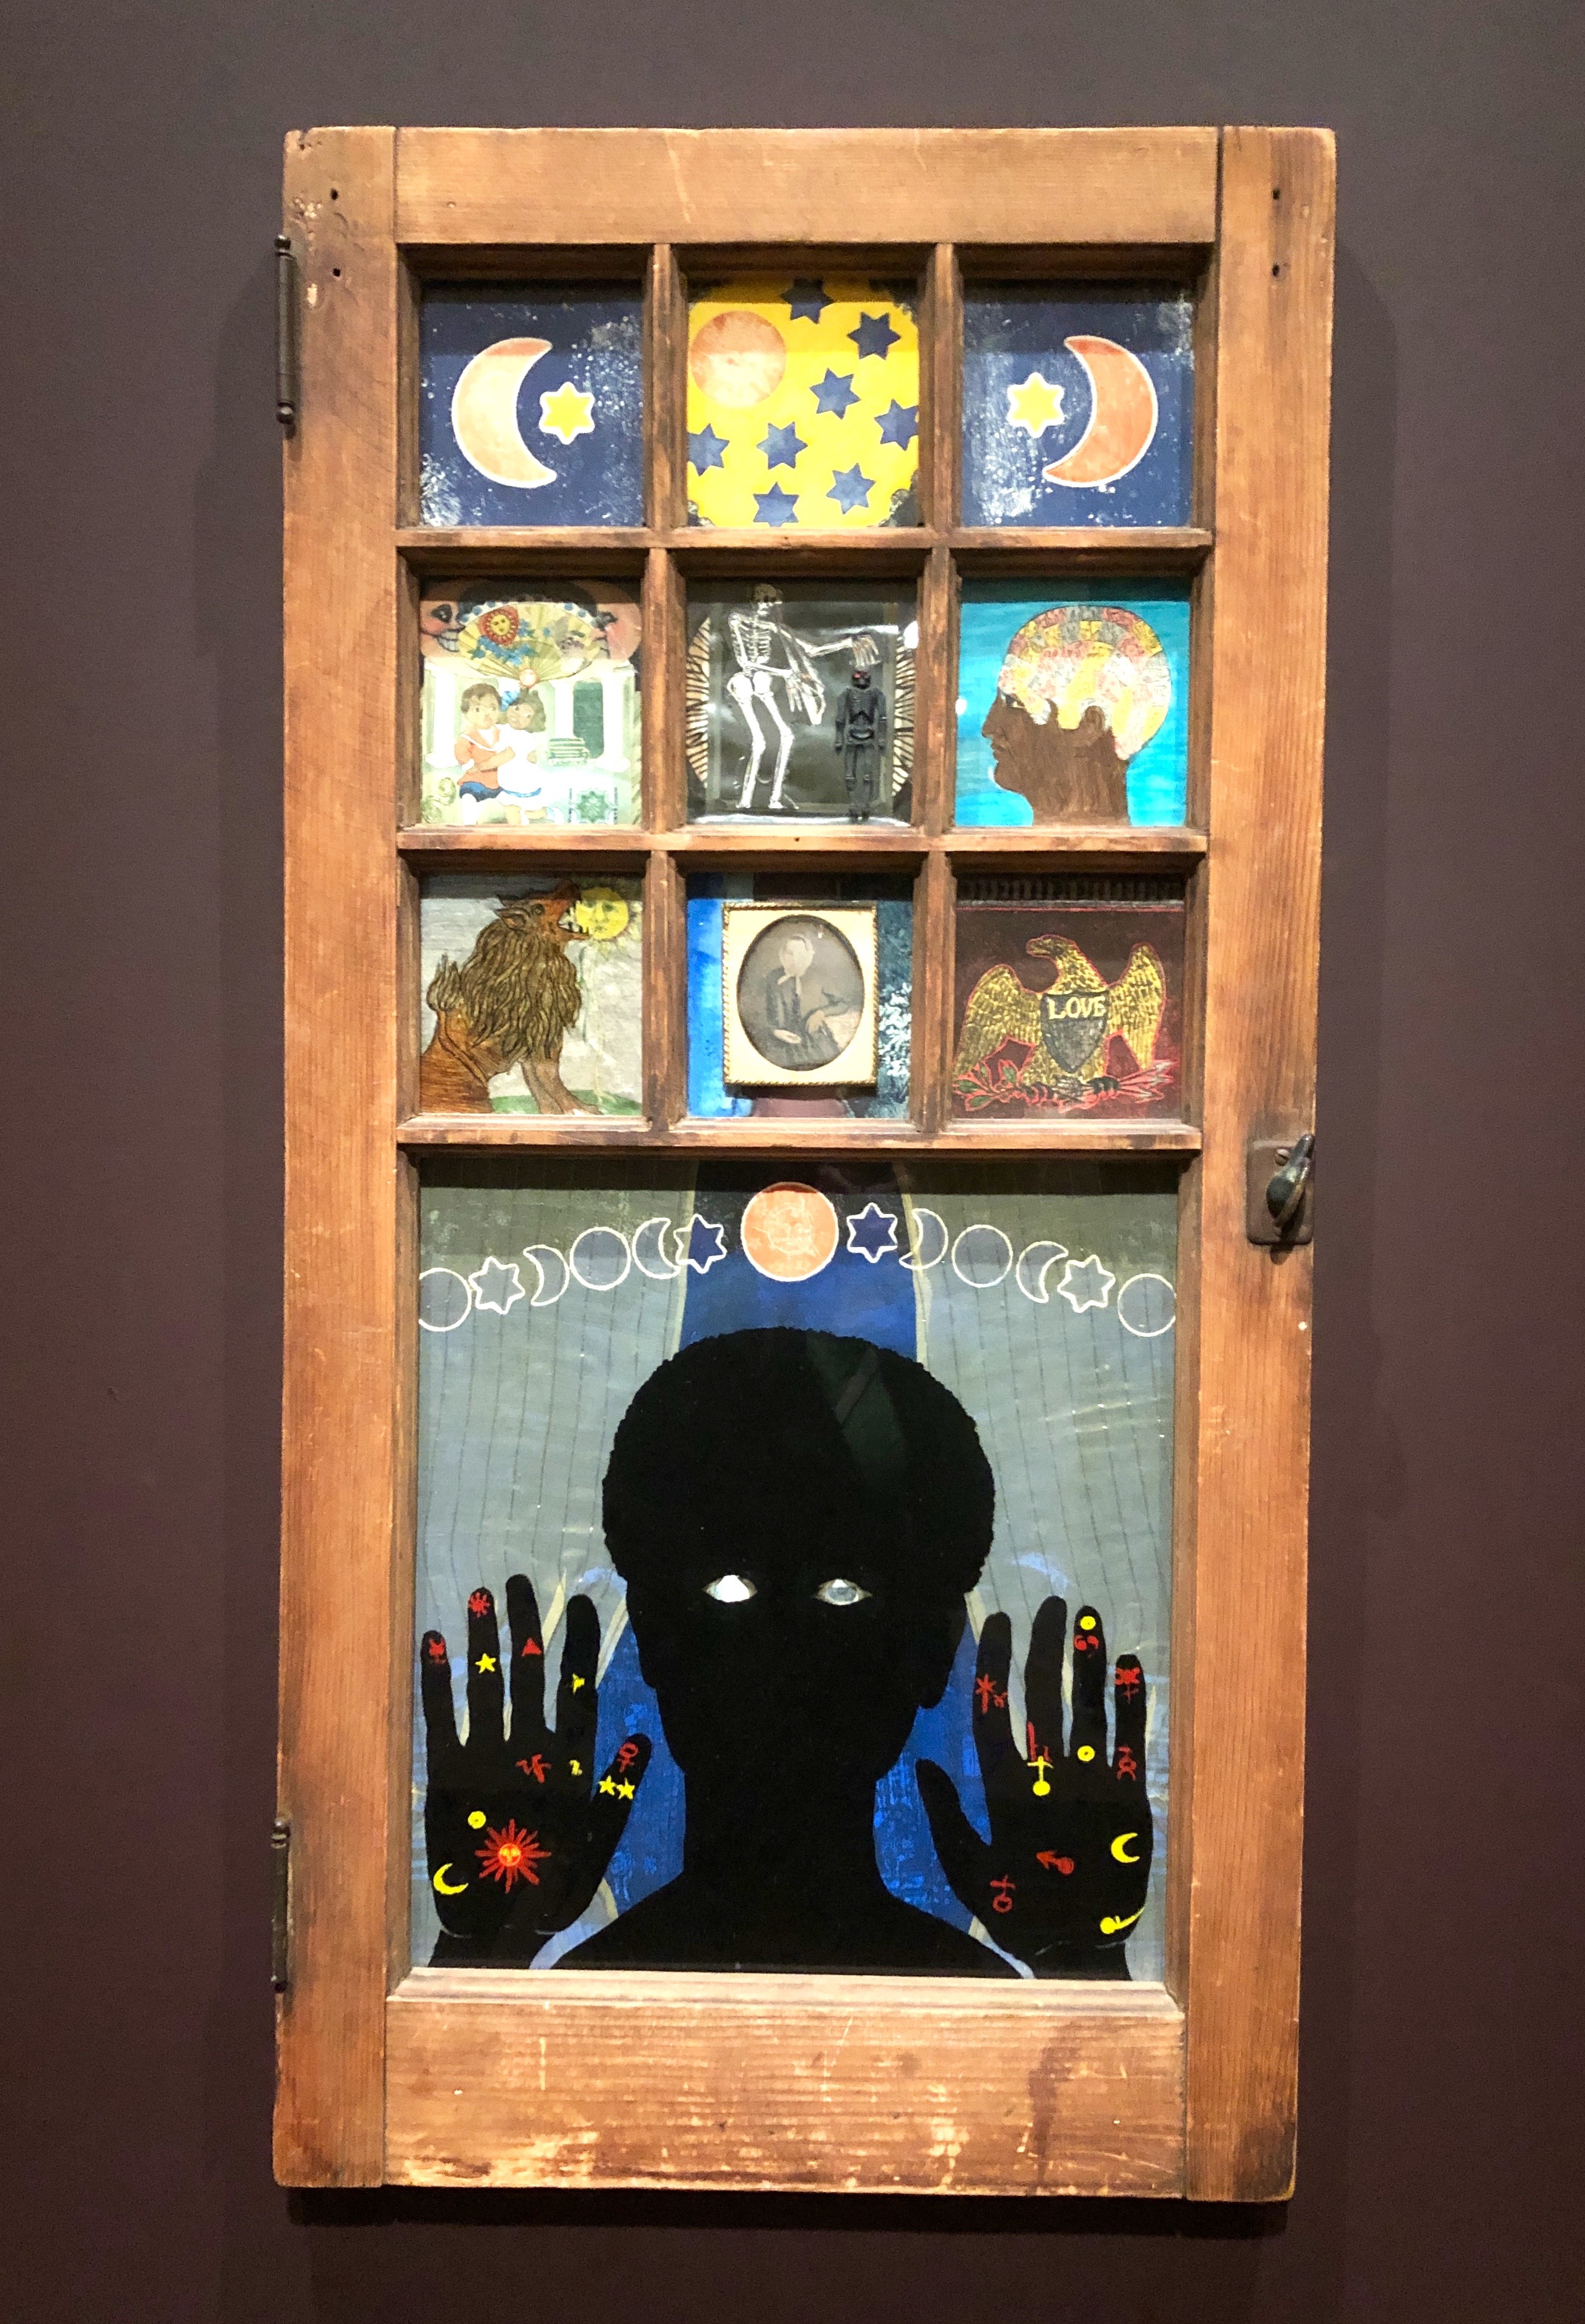 Betye Saar: The Legends of Black Girl’s Window at the MOMA New York City